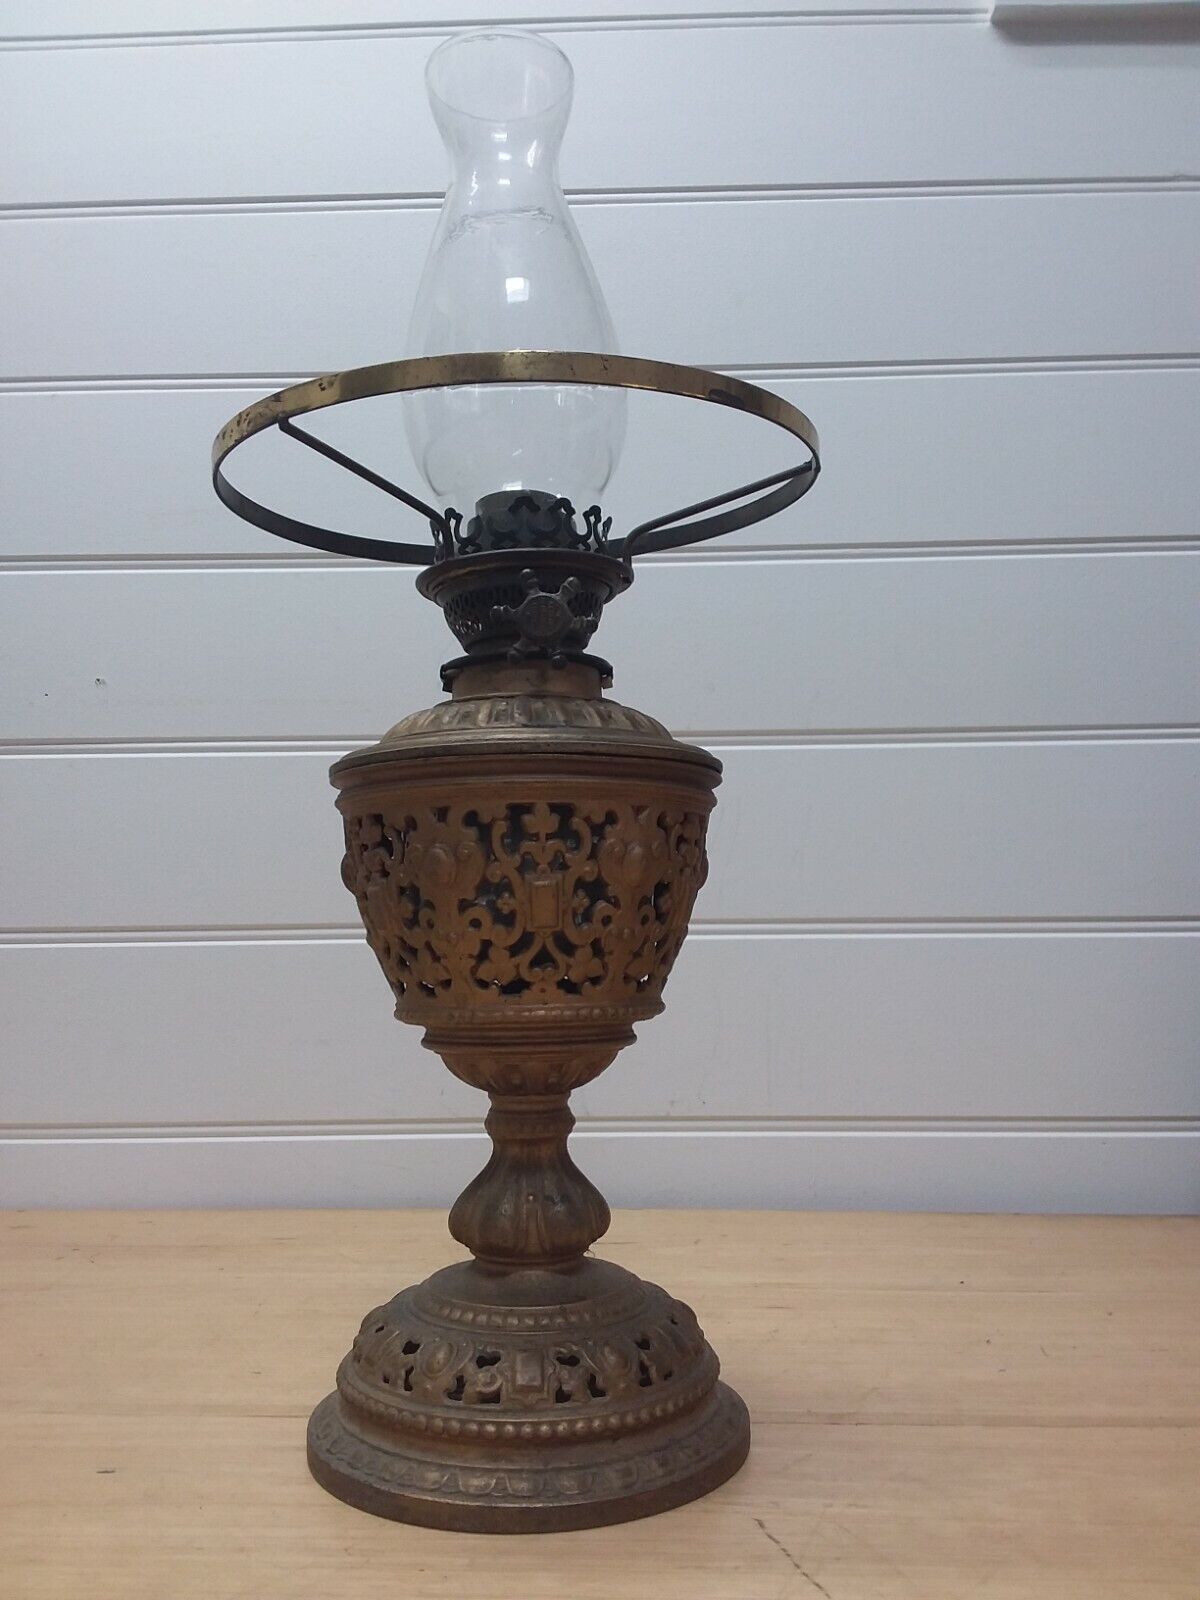  Rare  Antique  cast iron kerosene lamp a rettich Gerrard st london